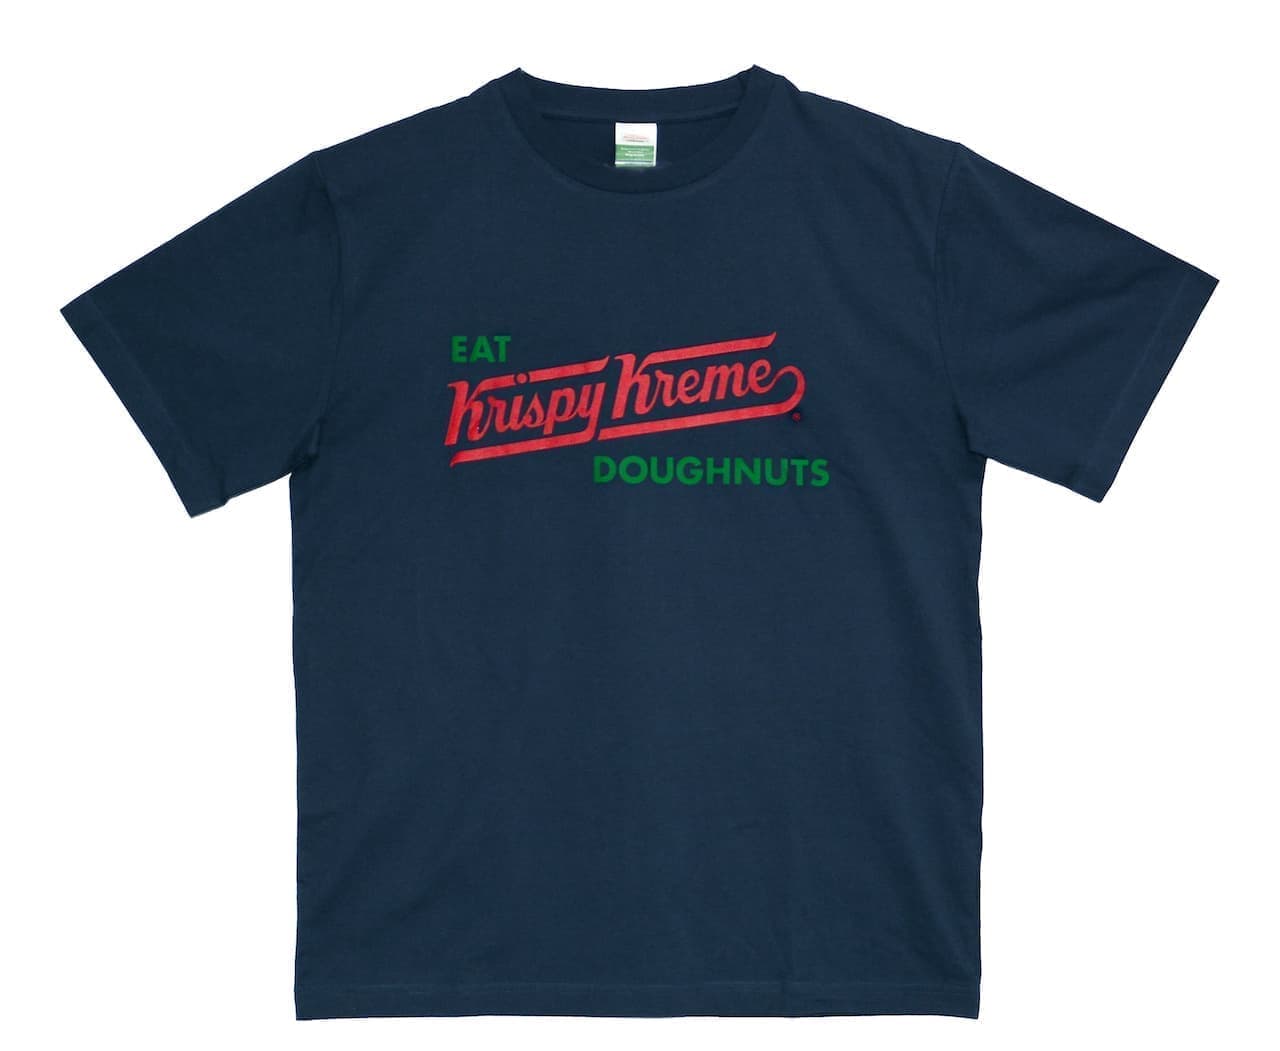 Krispy Kreme Doughnuts Original Script T-Shirt